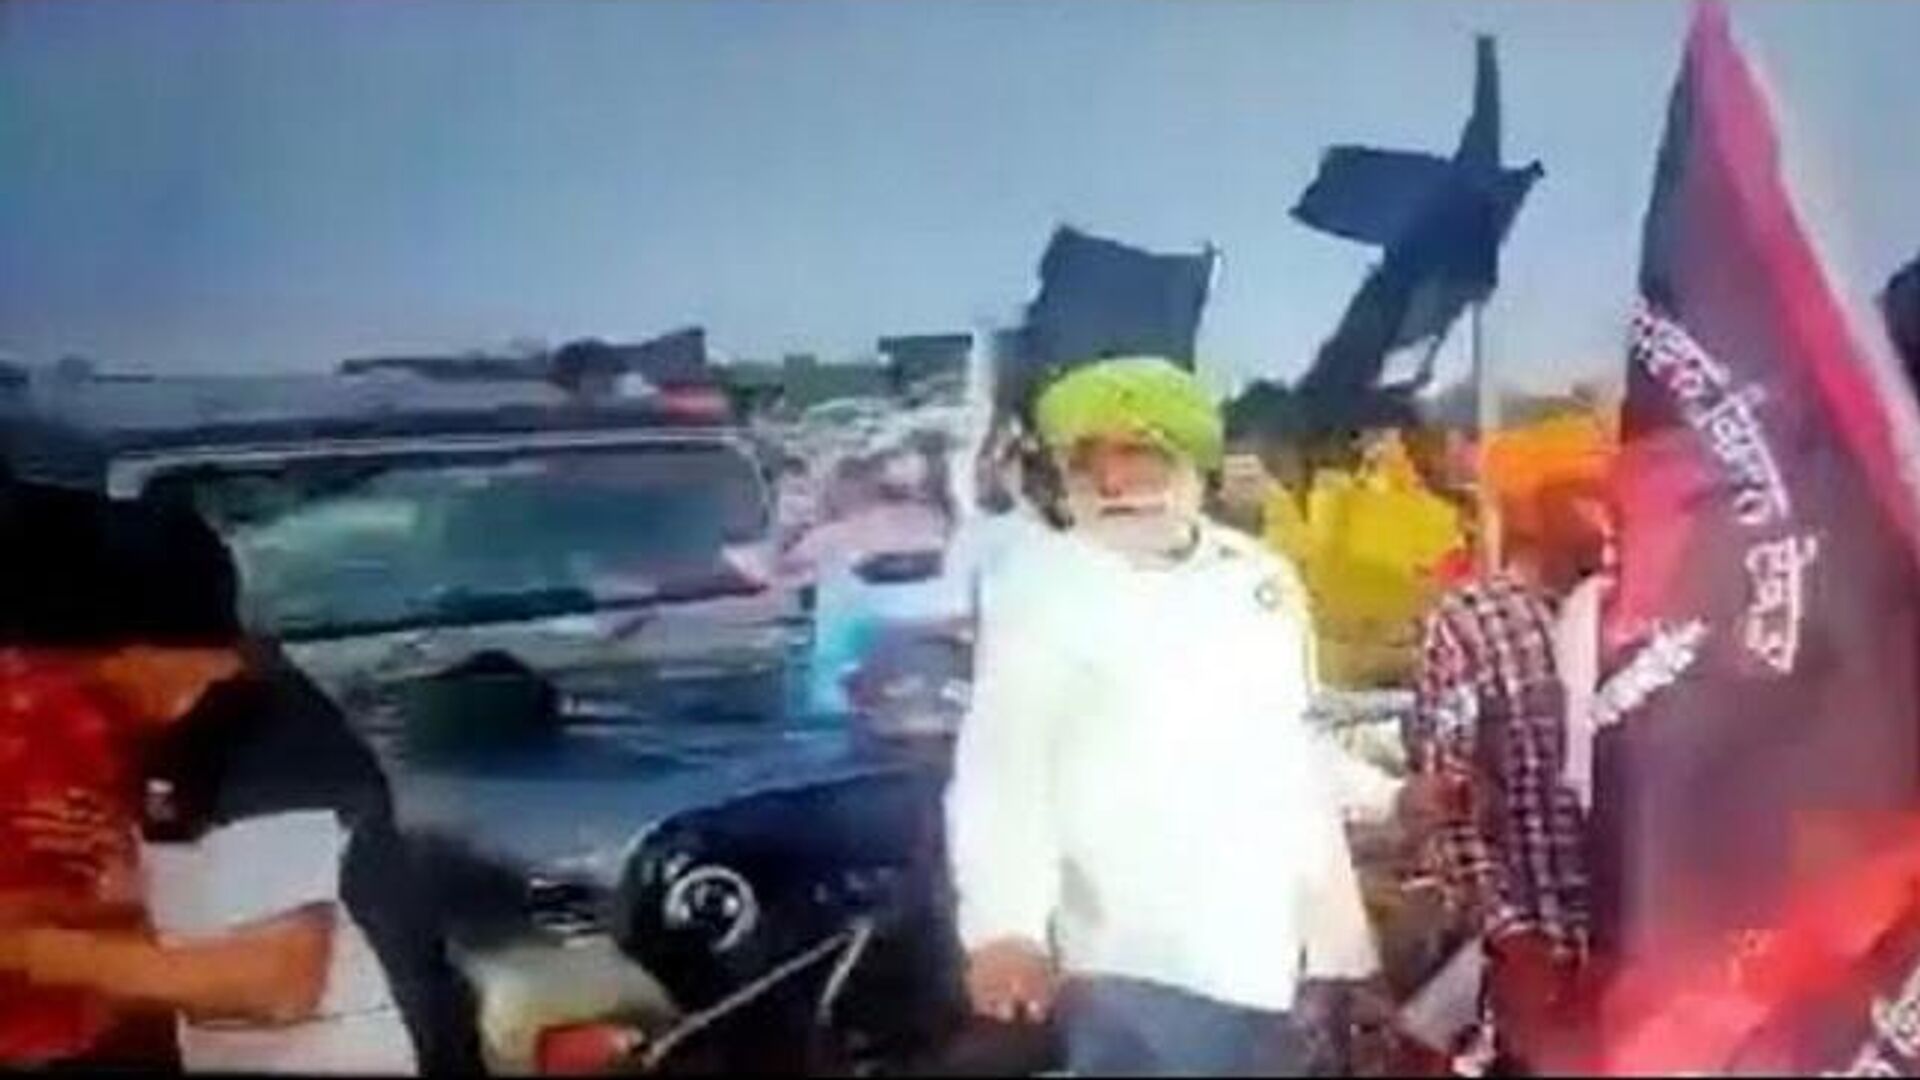  
Video showing cars running over farmers in Lakhimpur Kheri goes viral - Sputnik International, 1920, 05.10.2021